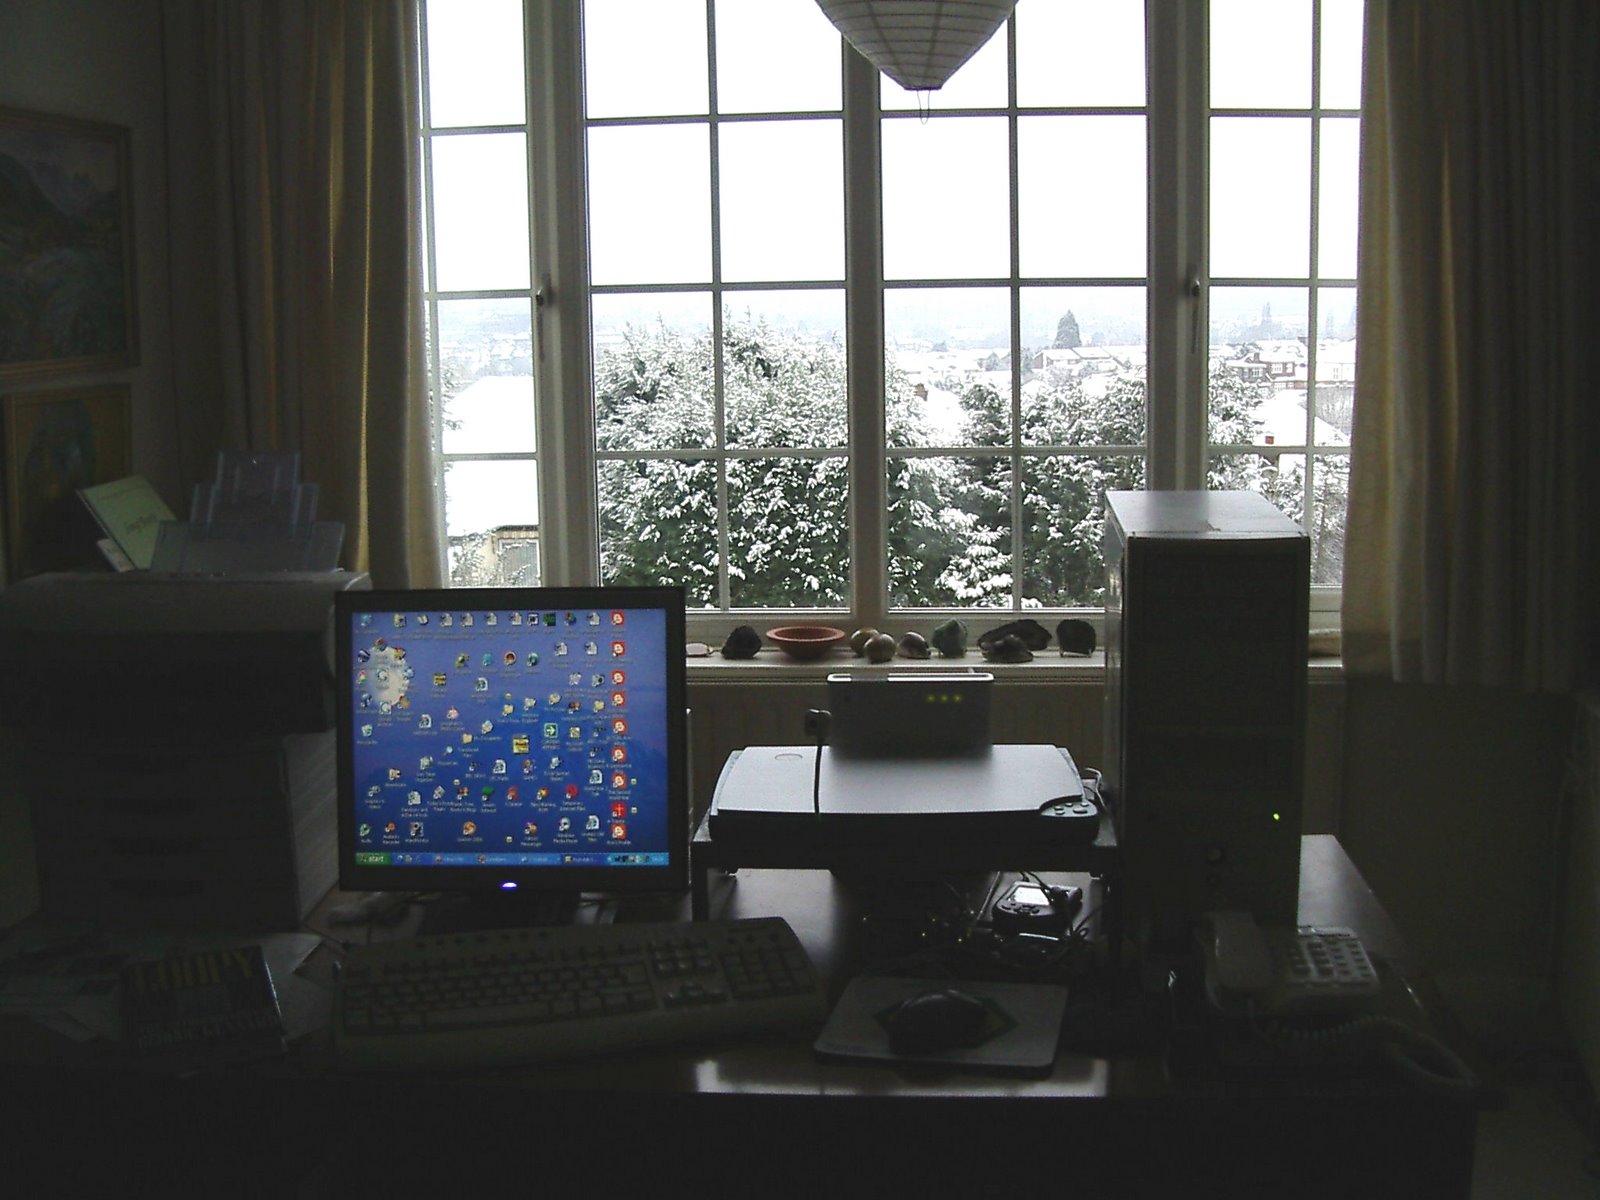 [Snow+scene+from+my+window+24-1-07.jpg]